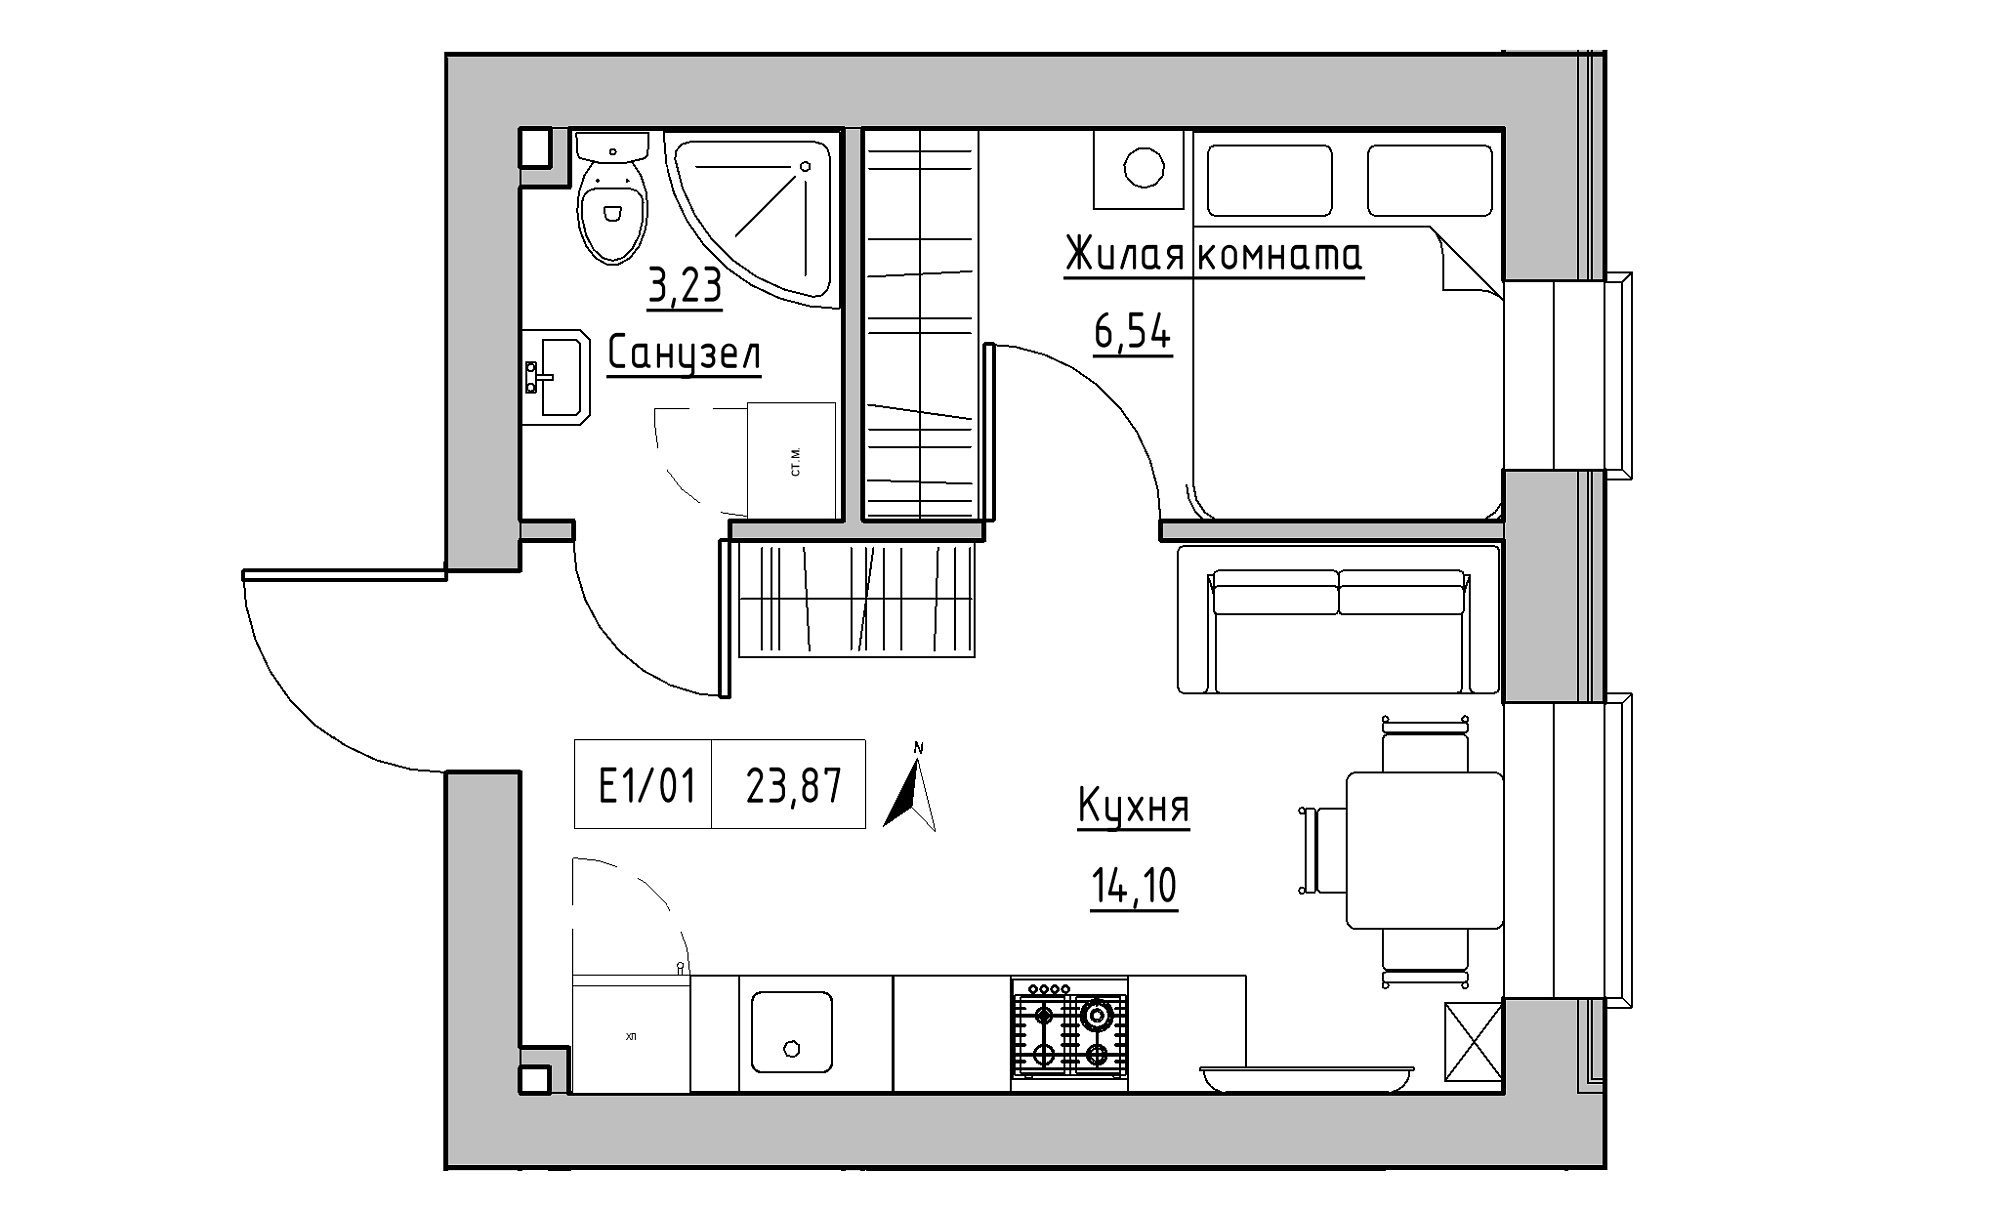 Planning 1-rm flats area 23.87m2, KS-015-02/0004.